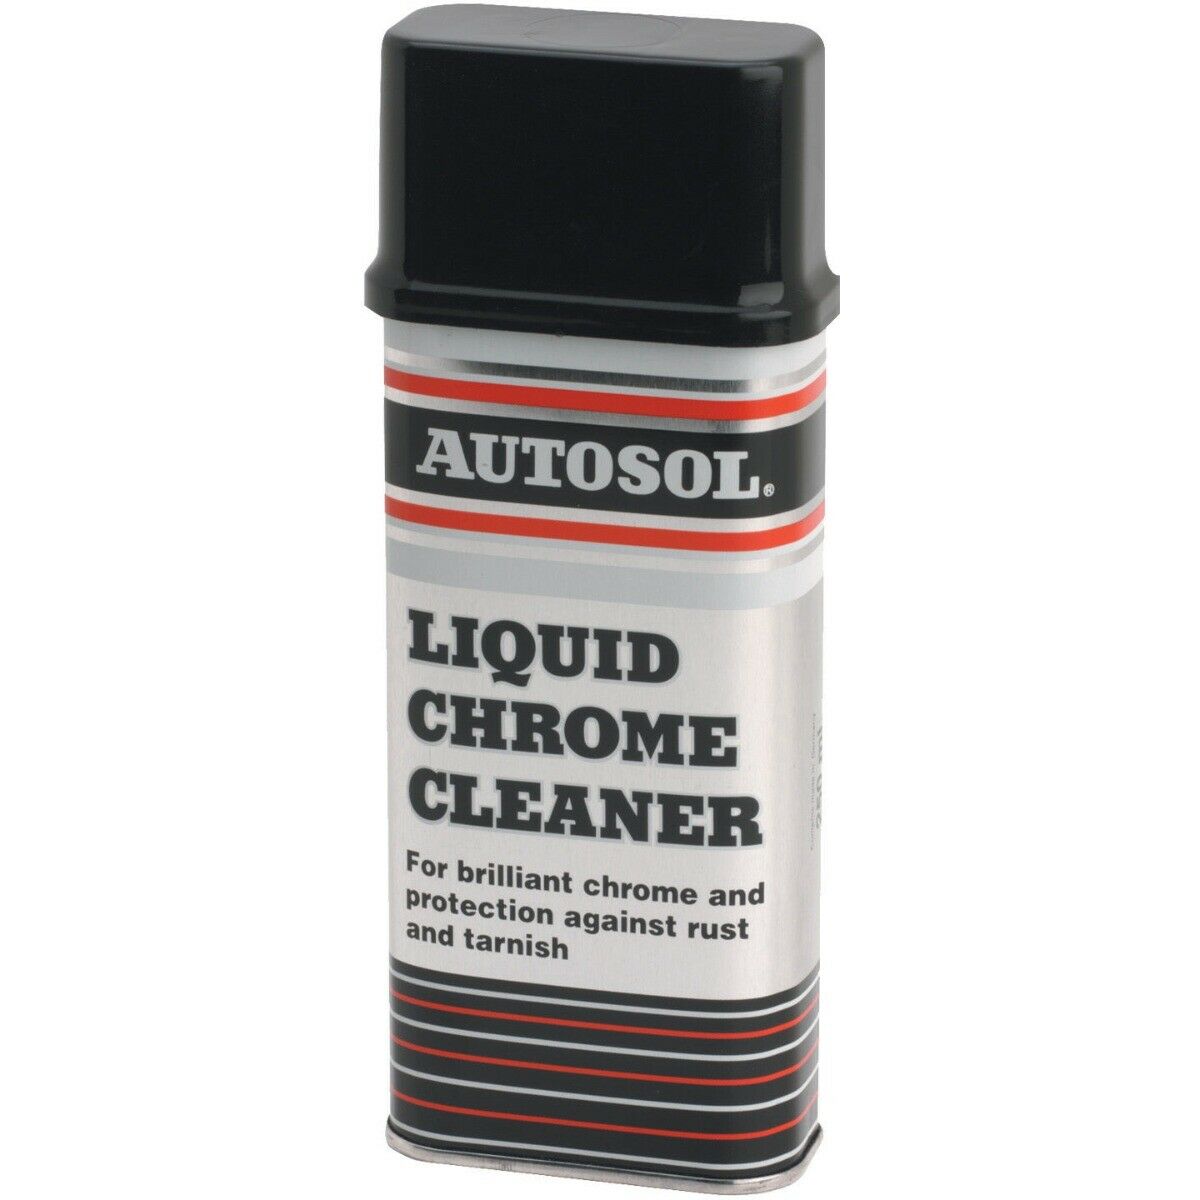 Chrome cleaner. Autosol Metal Polish Liquid. Очиститель хрома. Металл клинер очиститель металла. Очиститель металлических креплений авто.